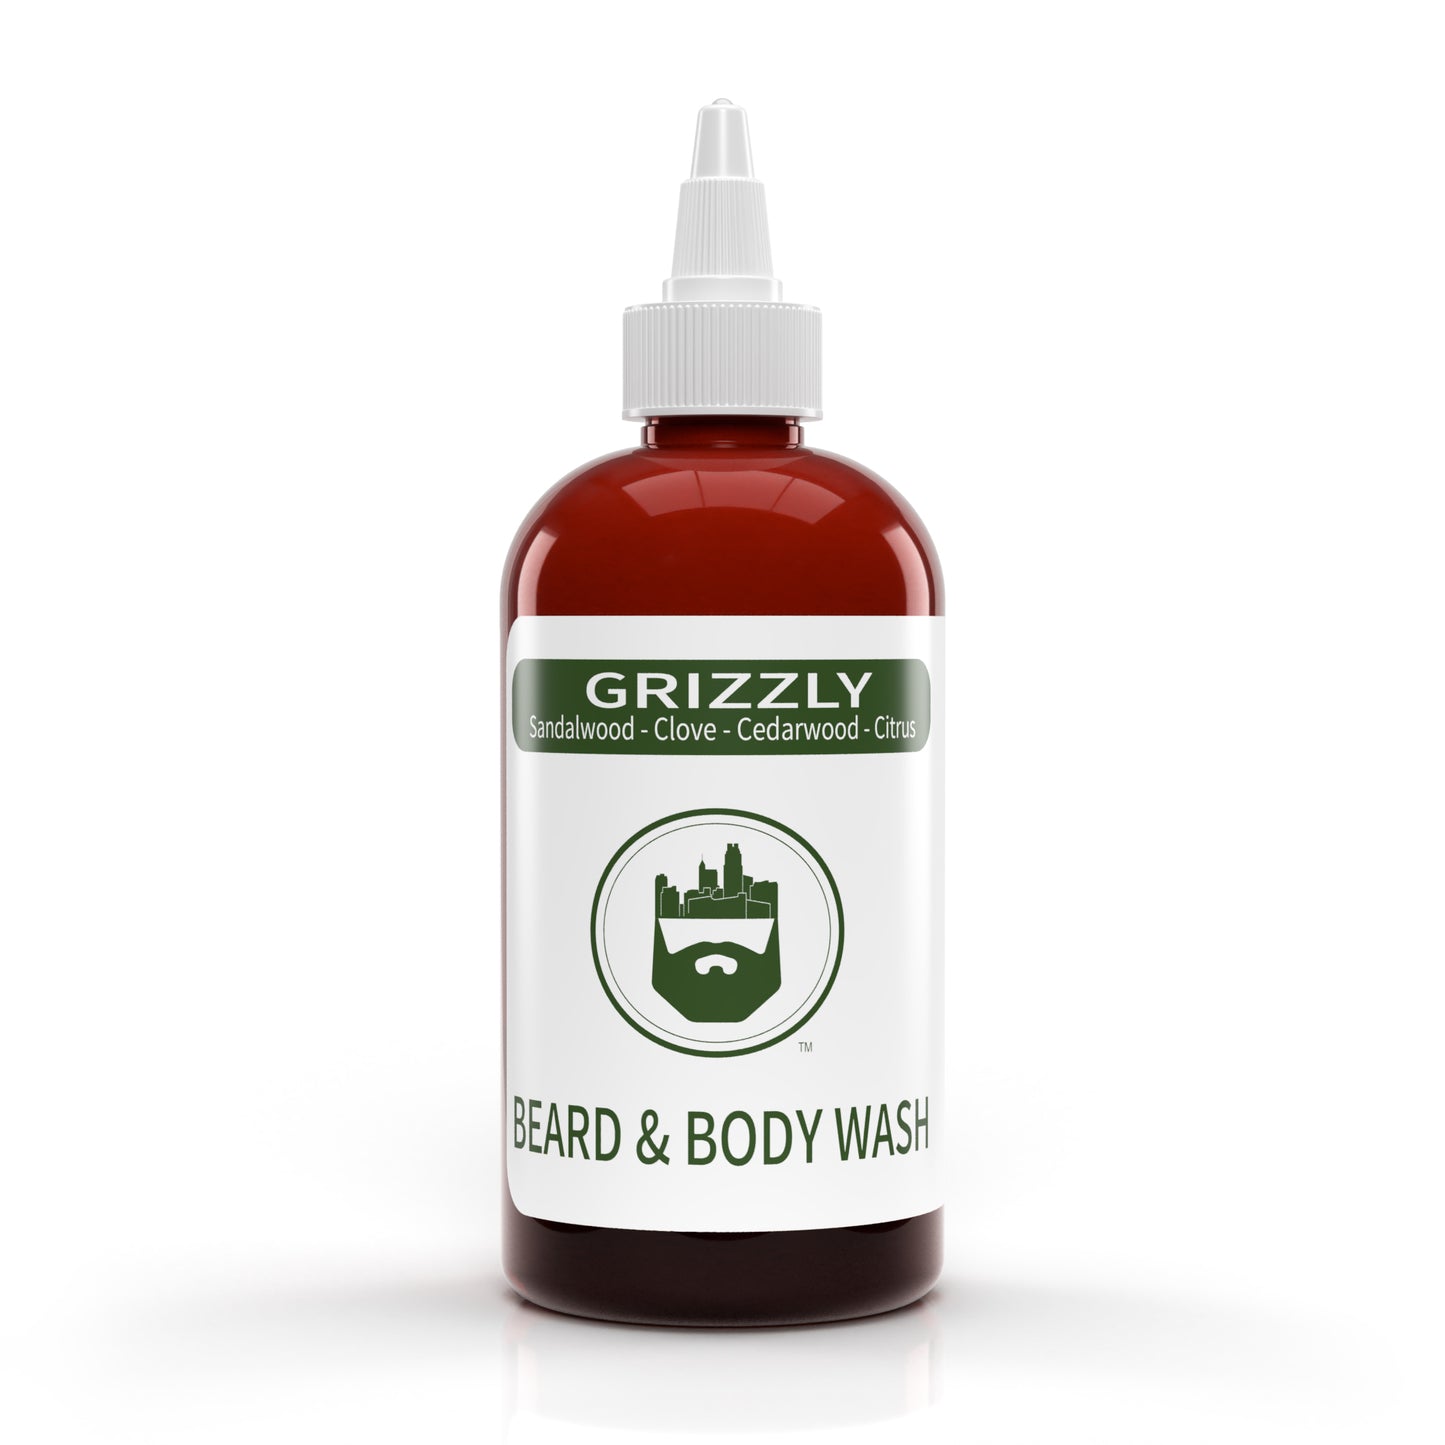 Grizzly (Beard Wash) by Oak City Beard Company